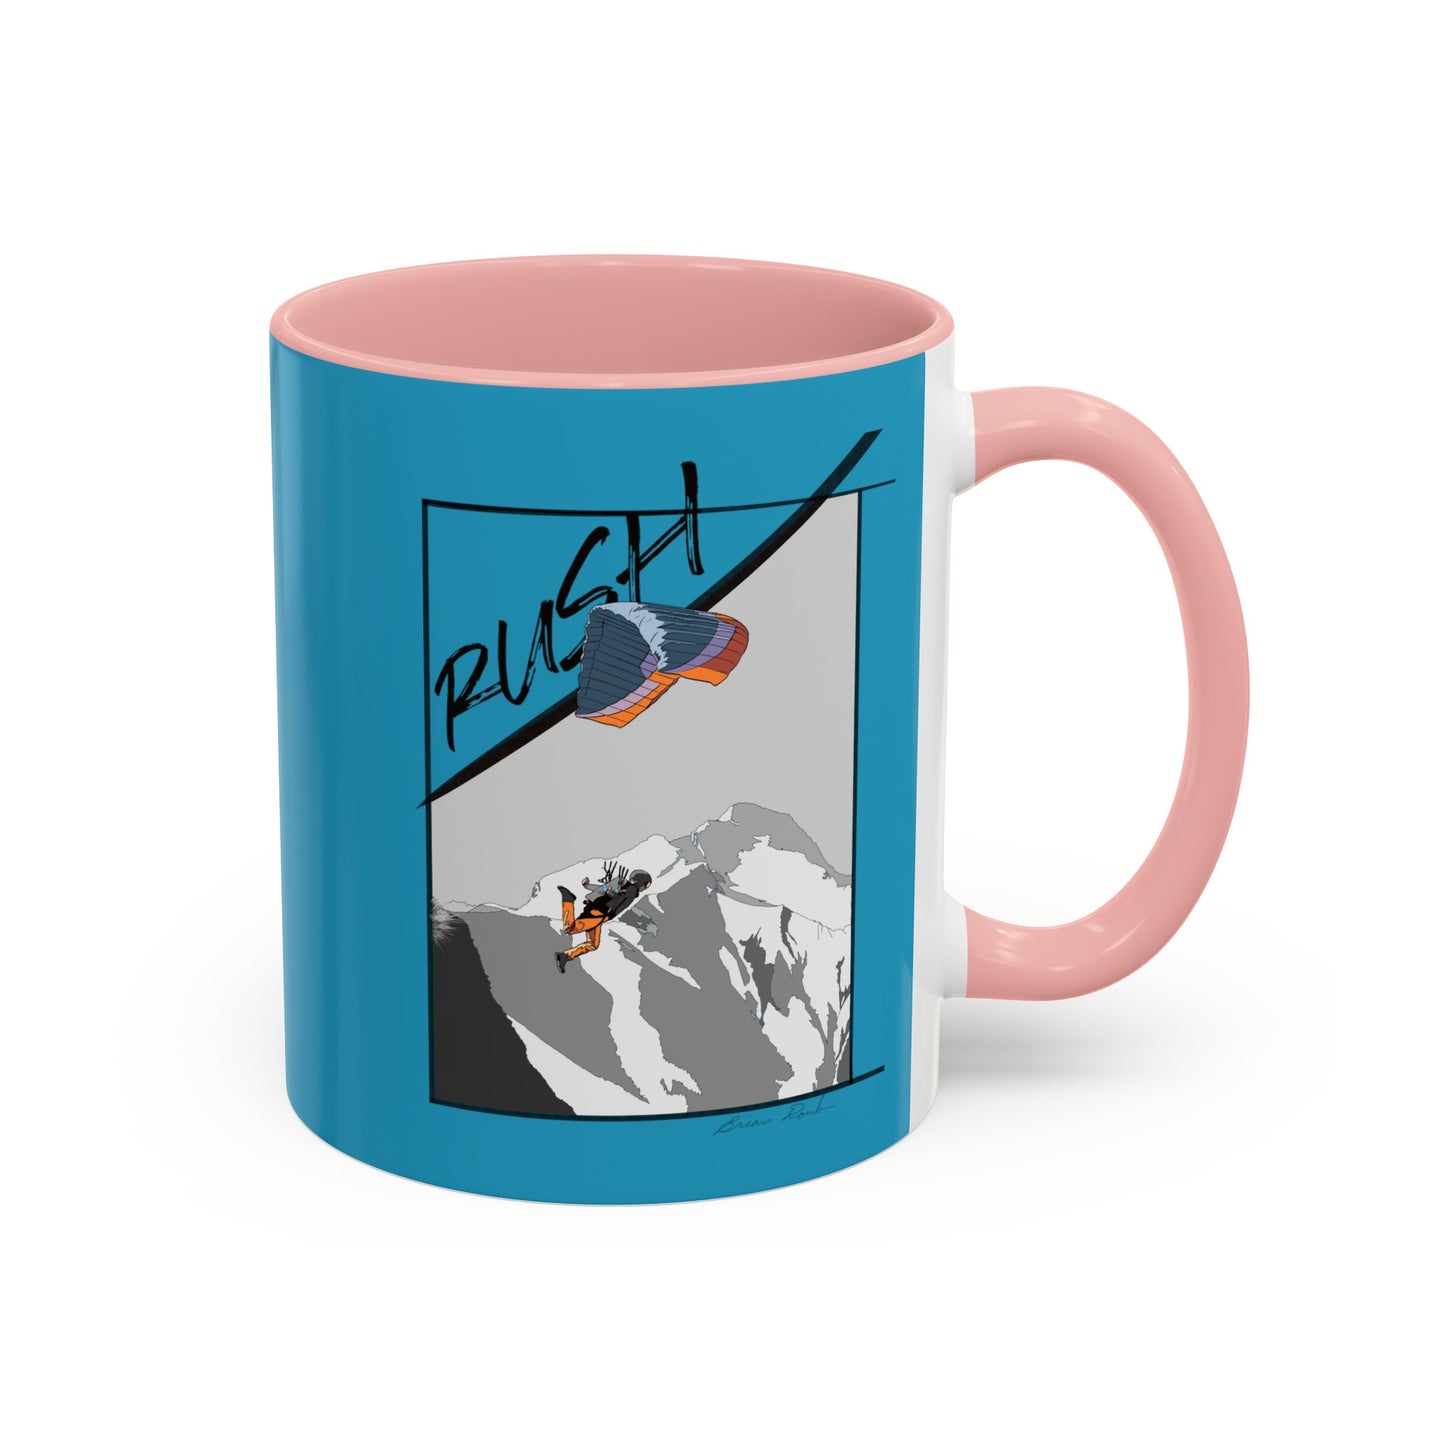 Turquoise "Rush" Speed Flying - Accent Coffee Mug, 11oz